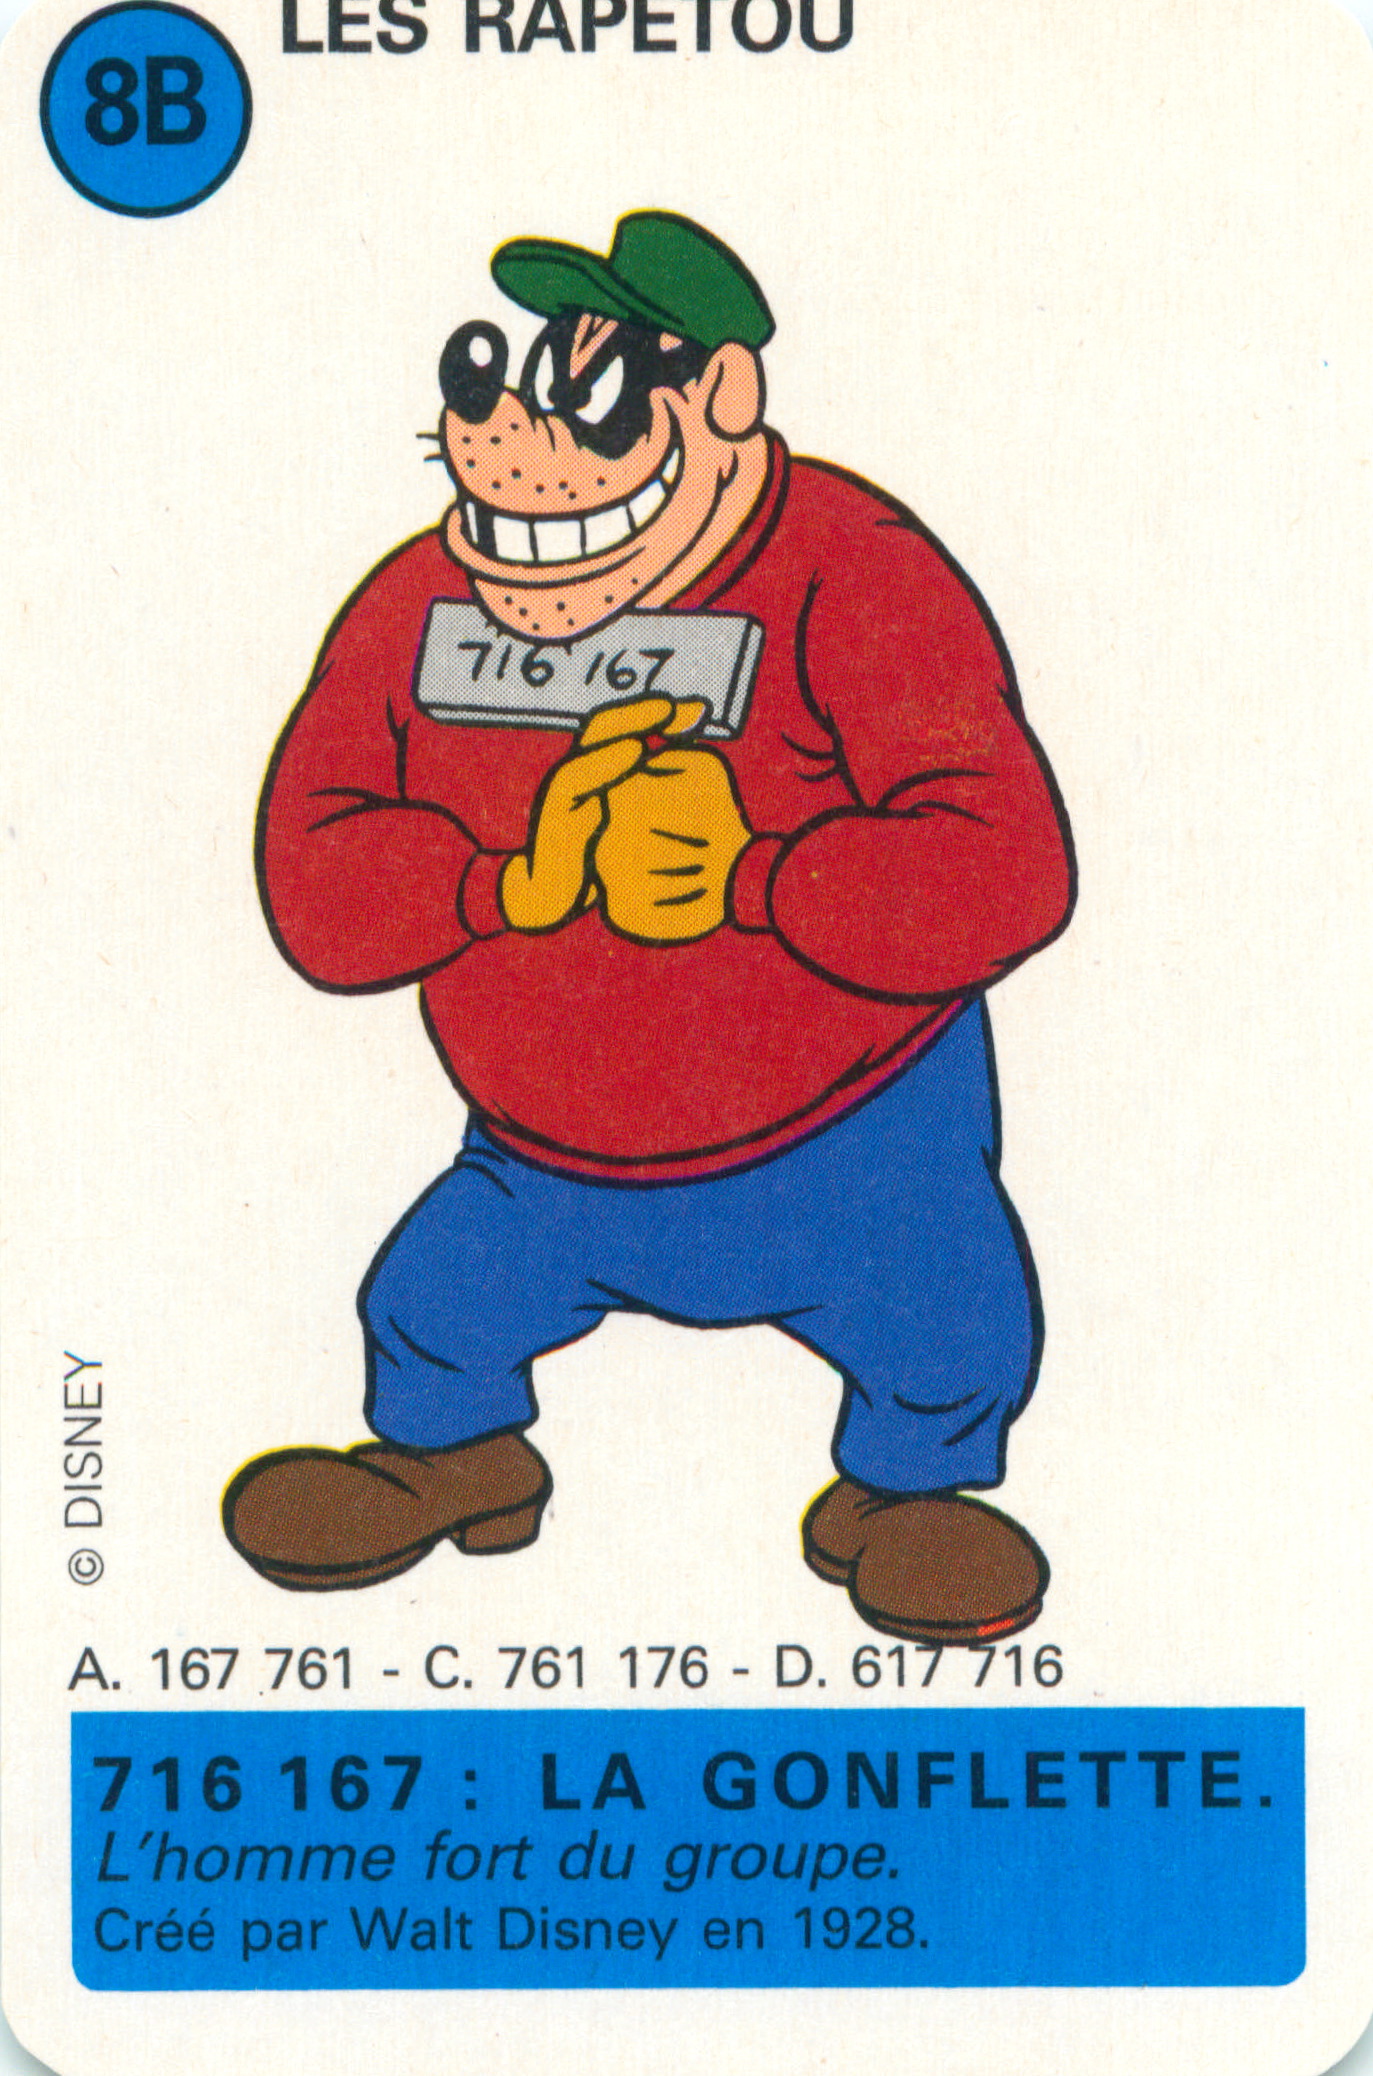 cartoon card depicting an image of a man dressed as a rat